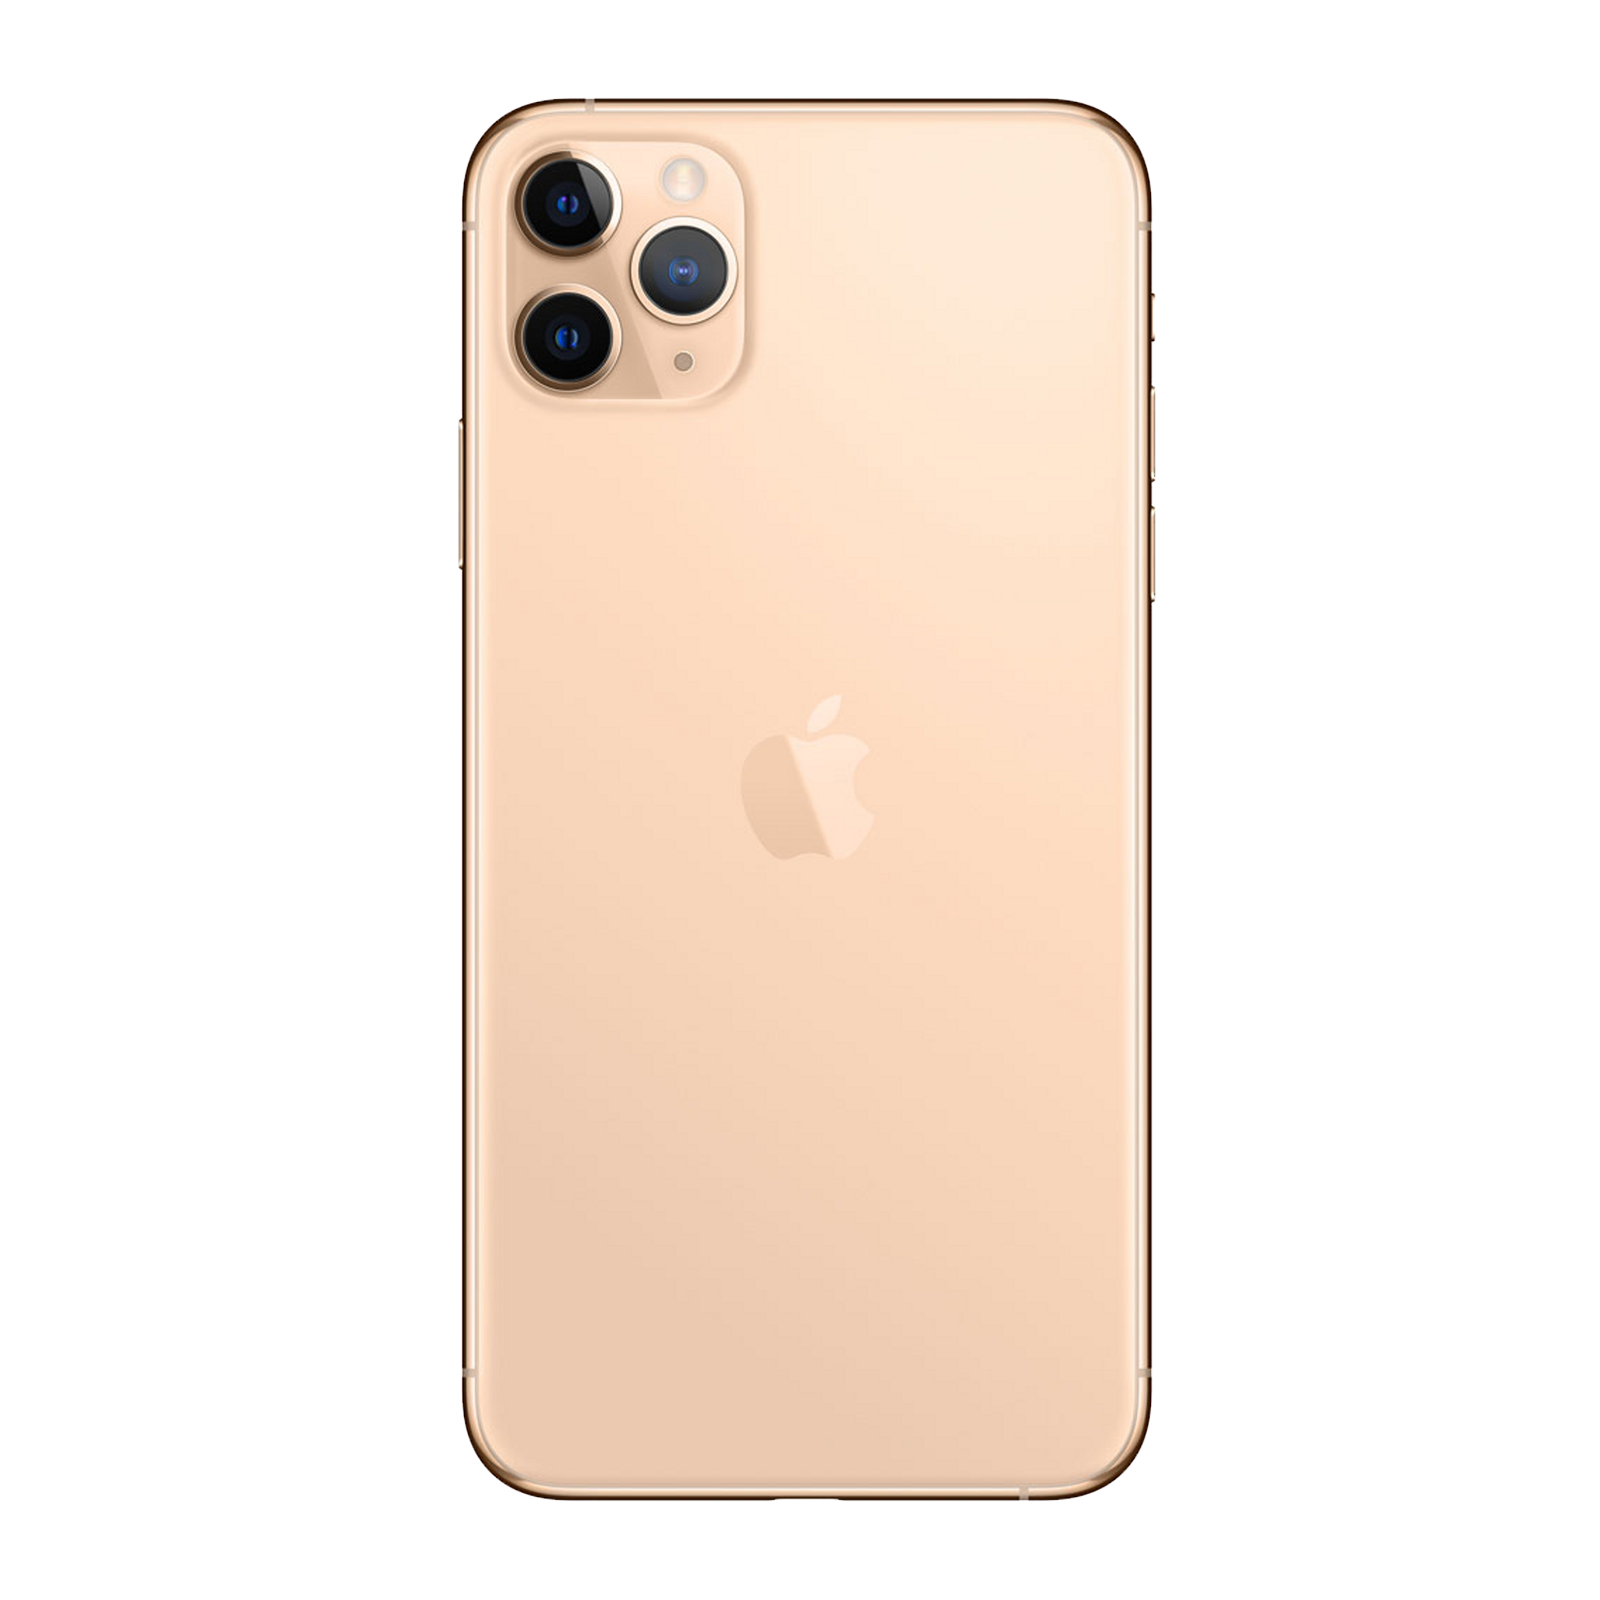 Apple iPhone 11 Pro 512GB Gold Very Good - Verizon